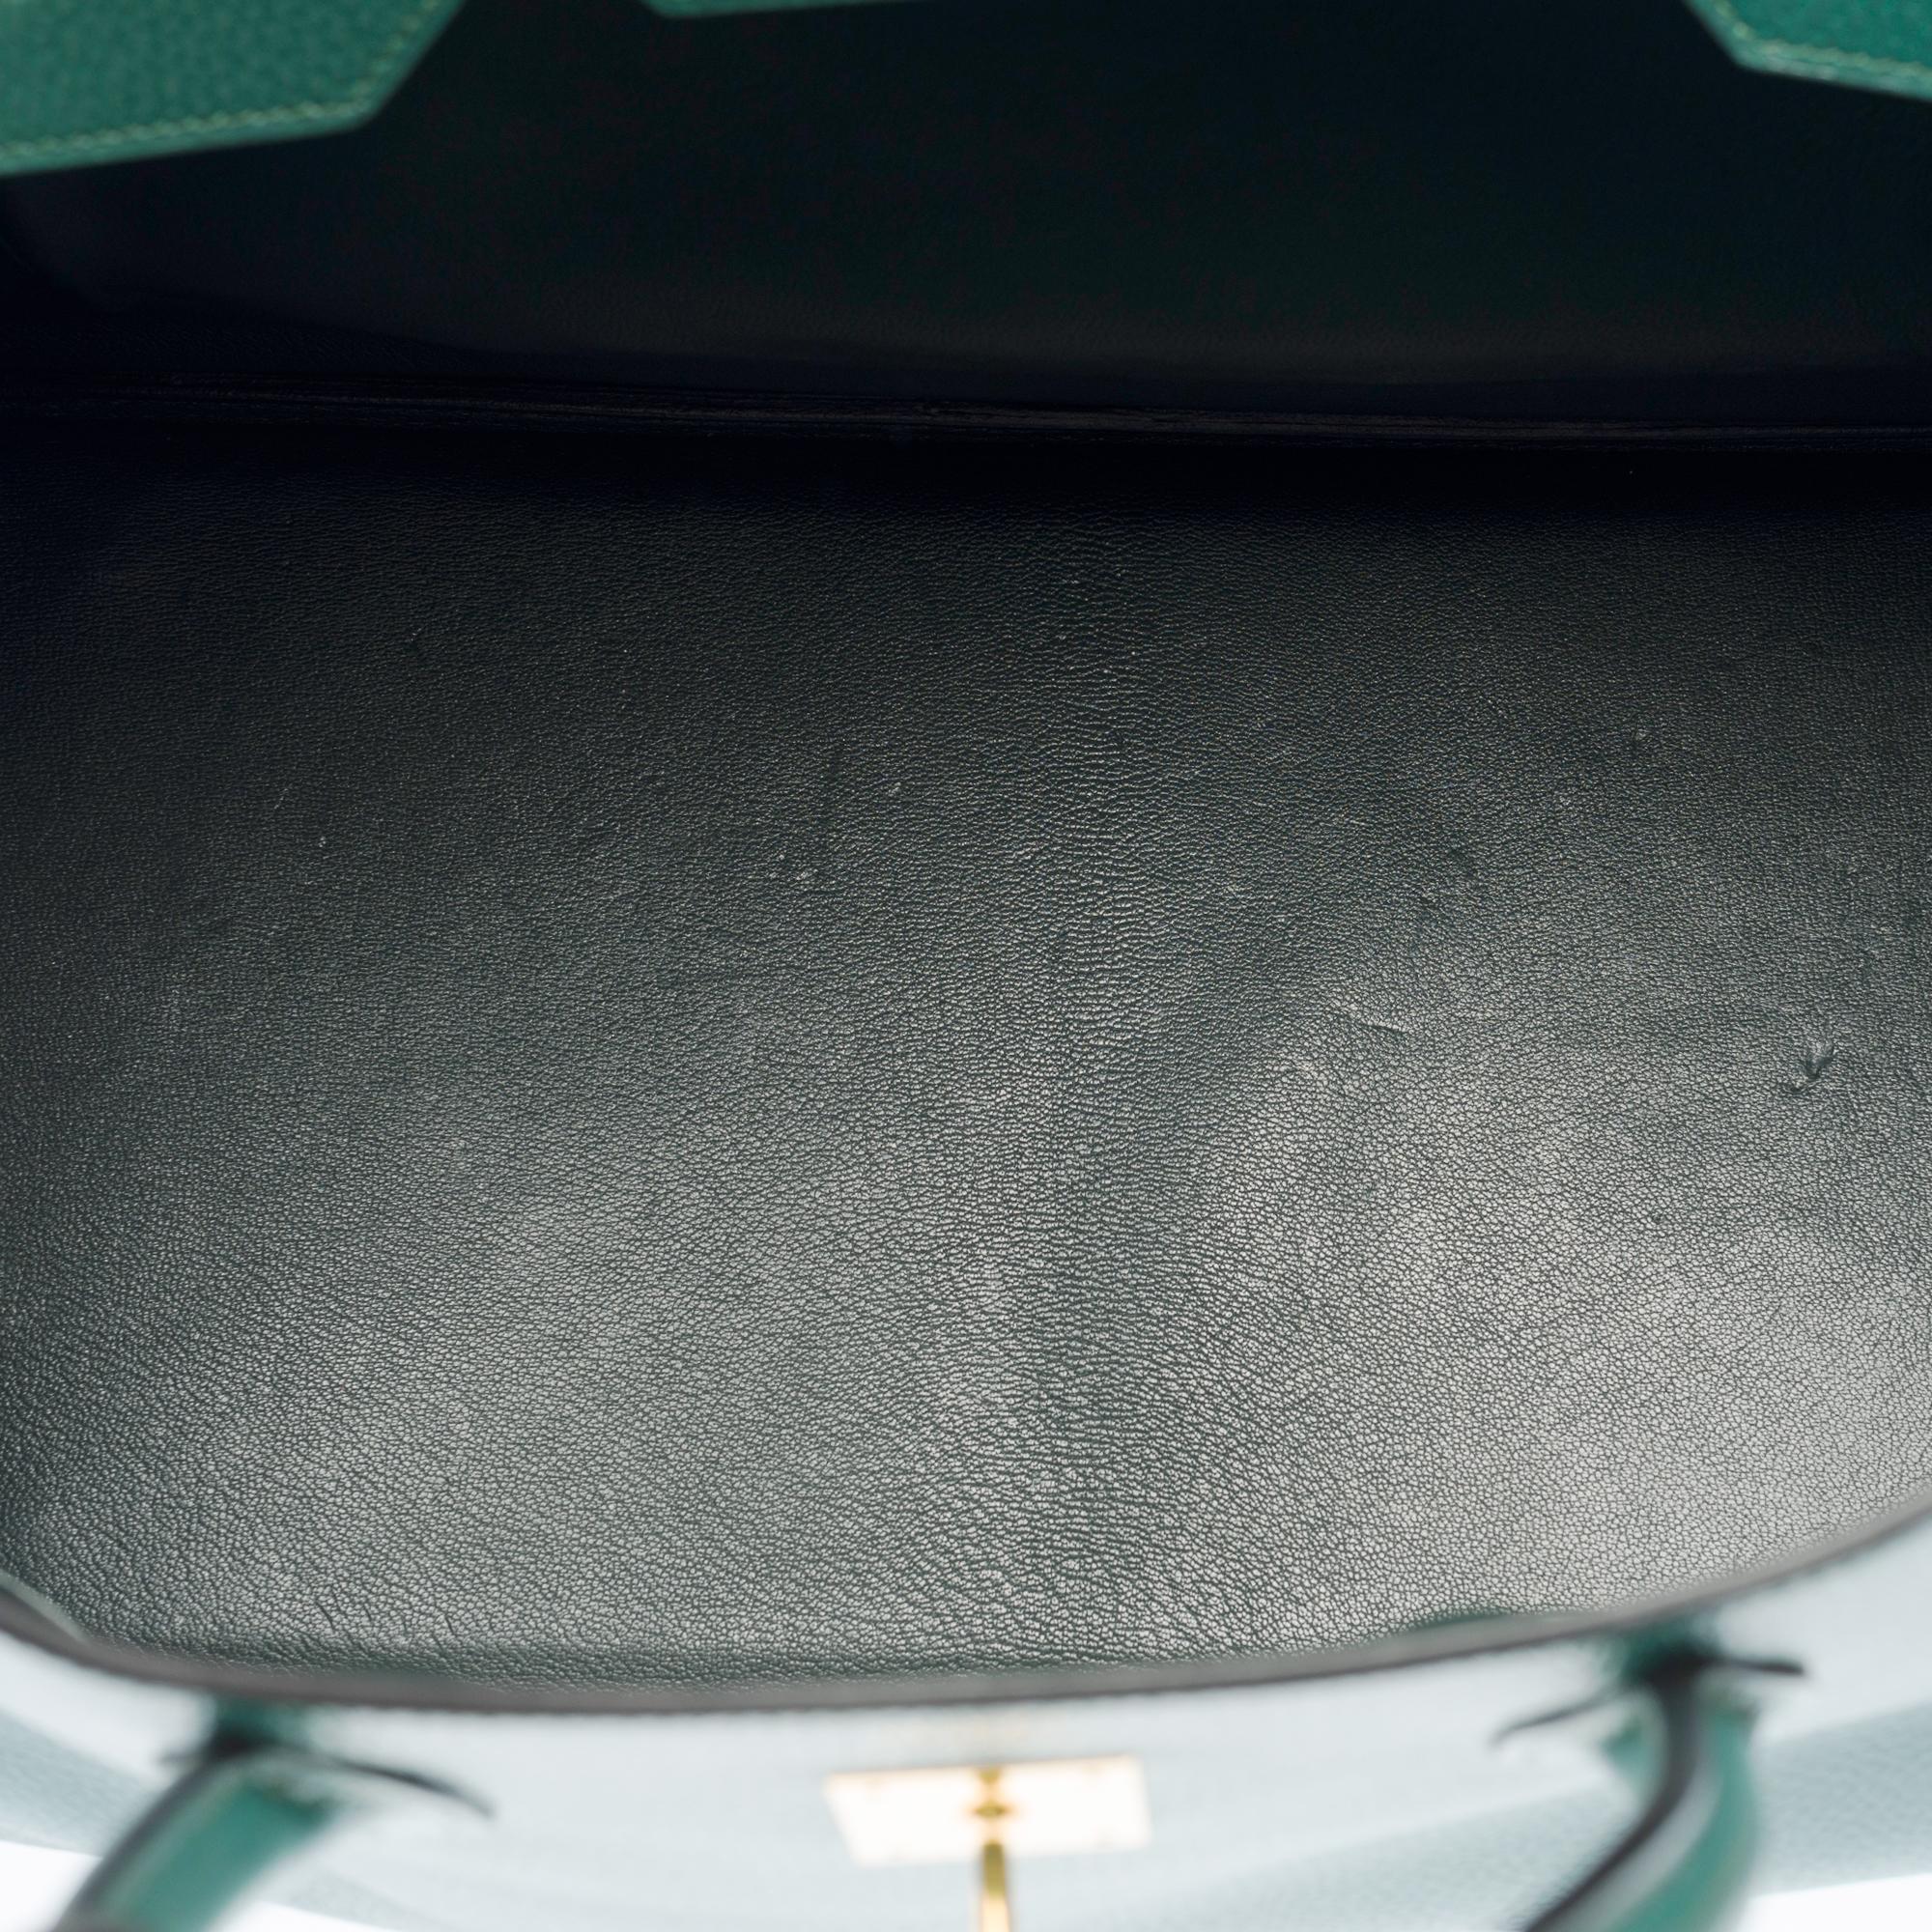 Rare Hermes Birkin 40 handbag in Emerald Green Ardennes Calf leather, GHW 3